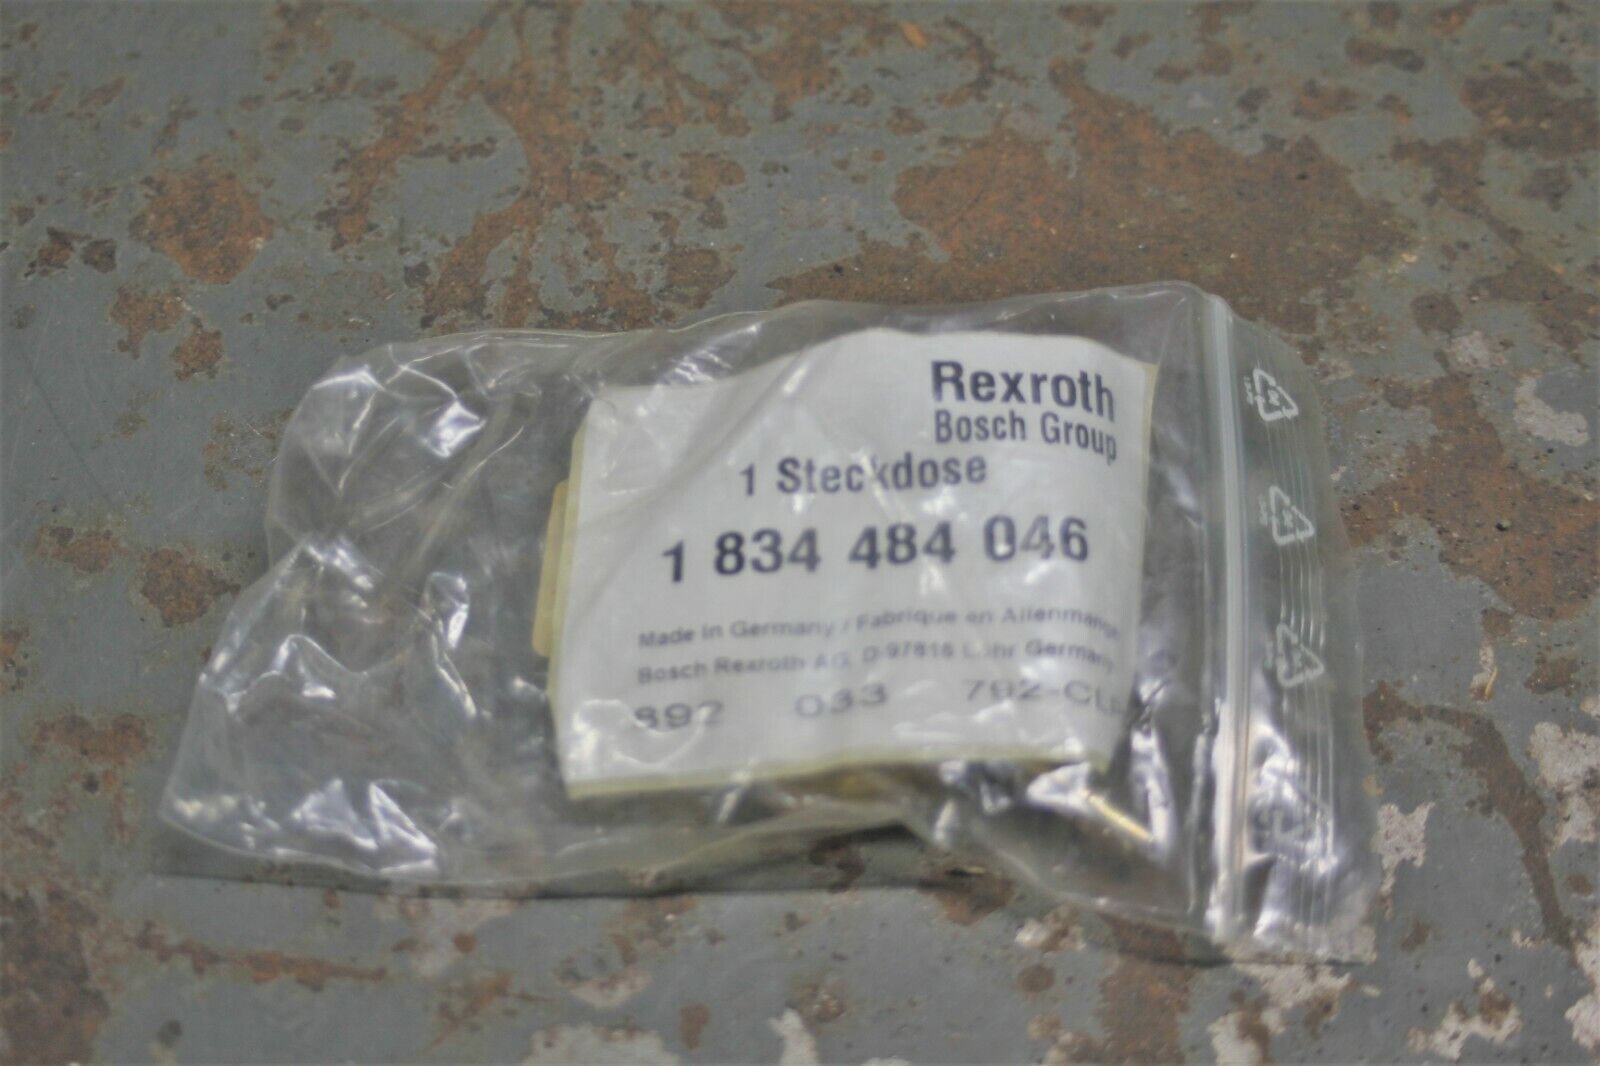 Bosch Rexroth Relay Socket Accessory 1834484046